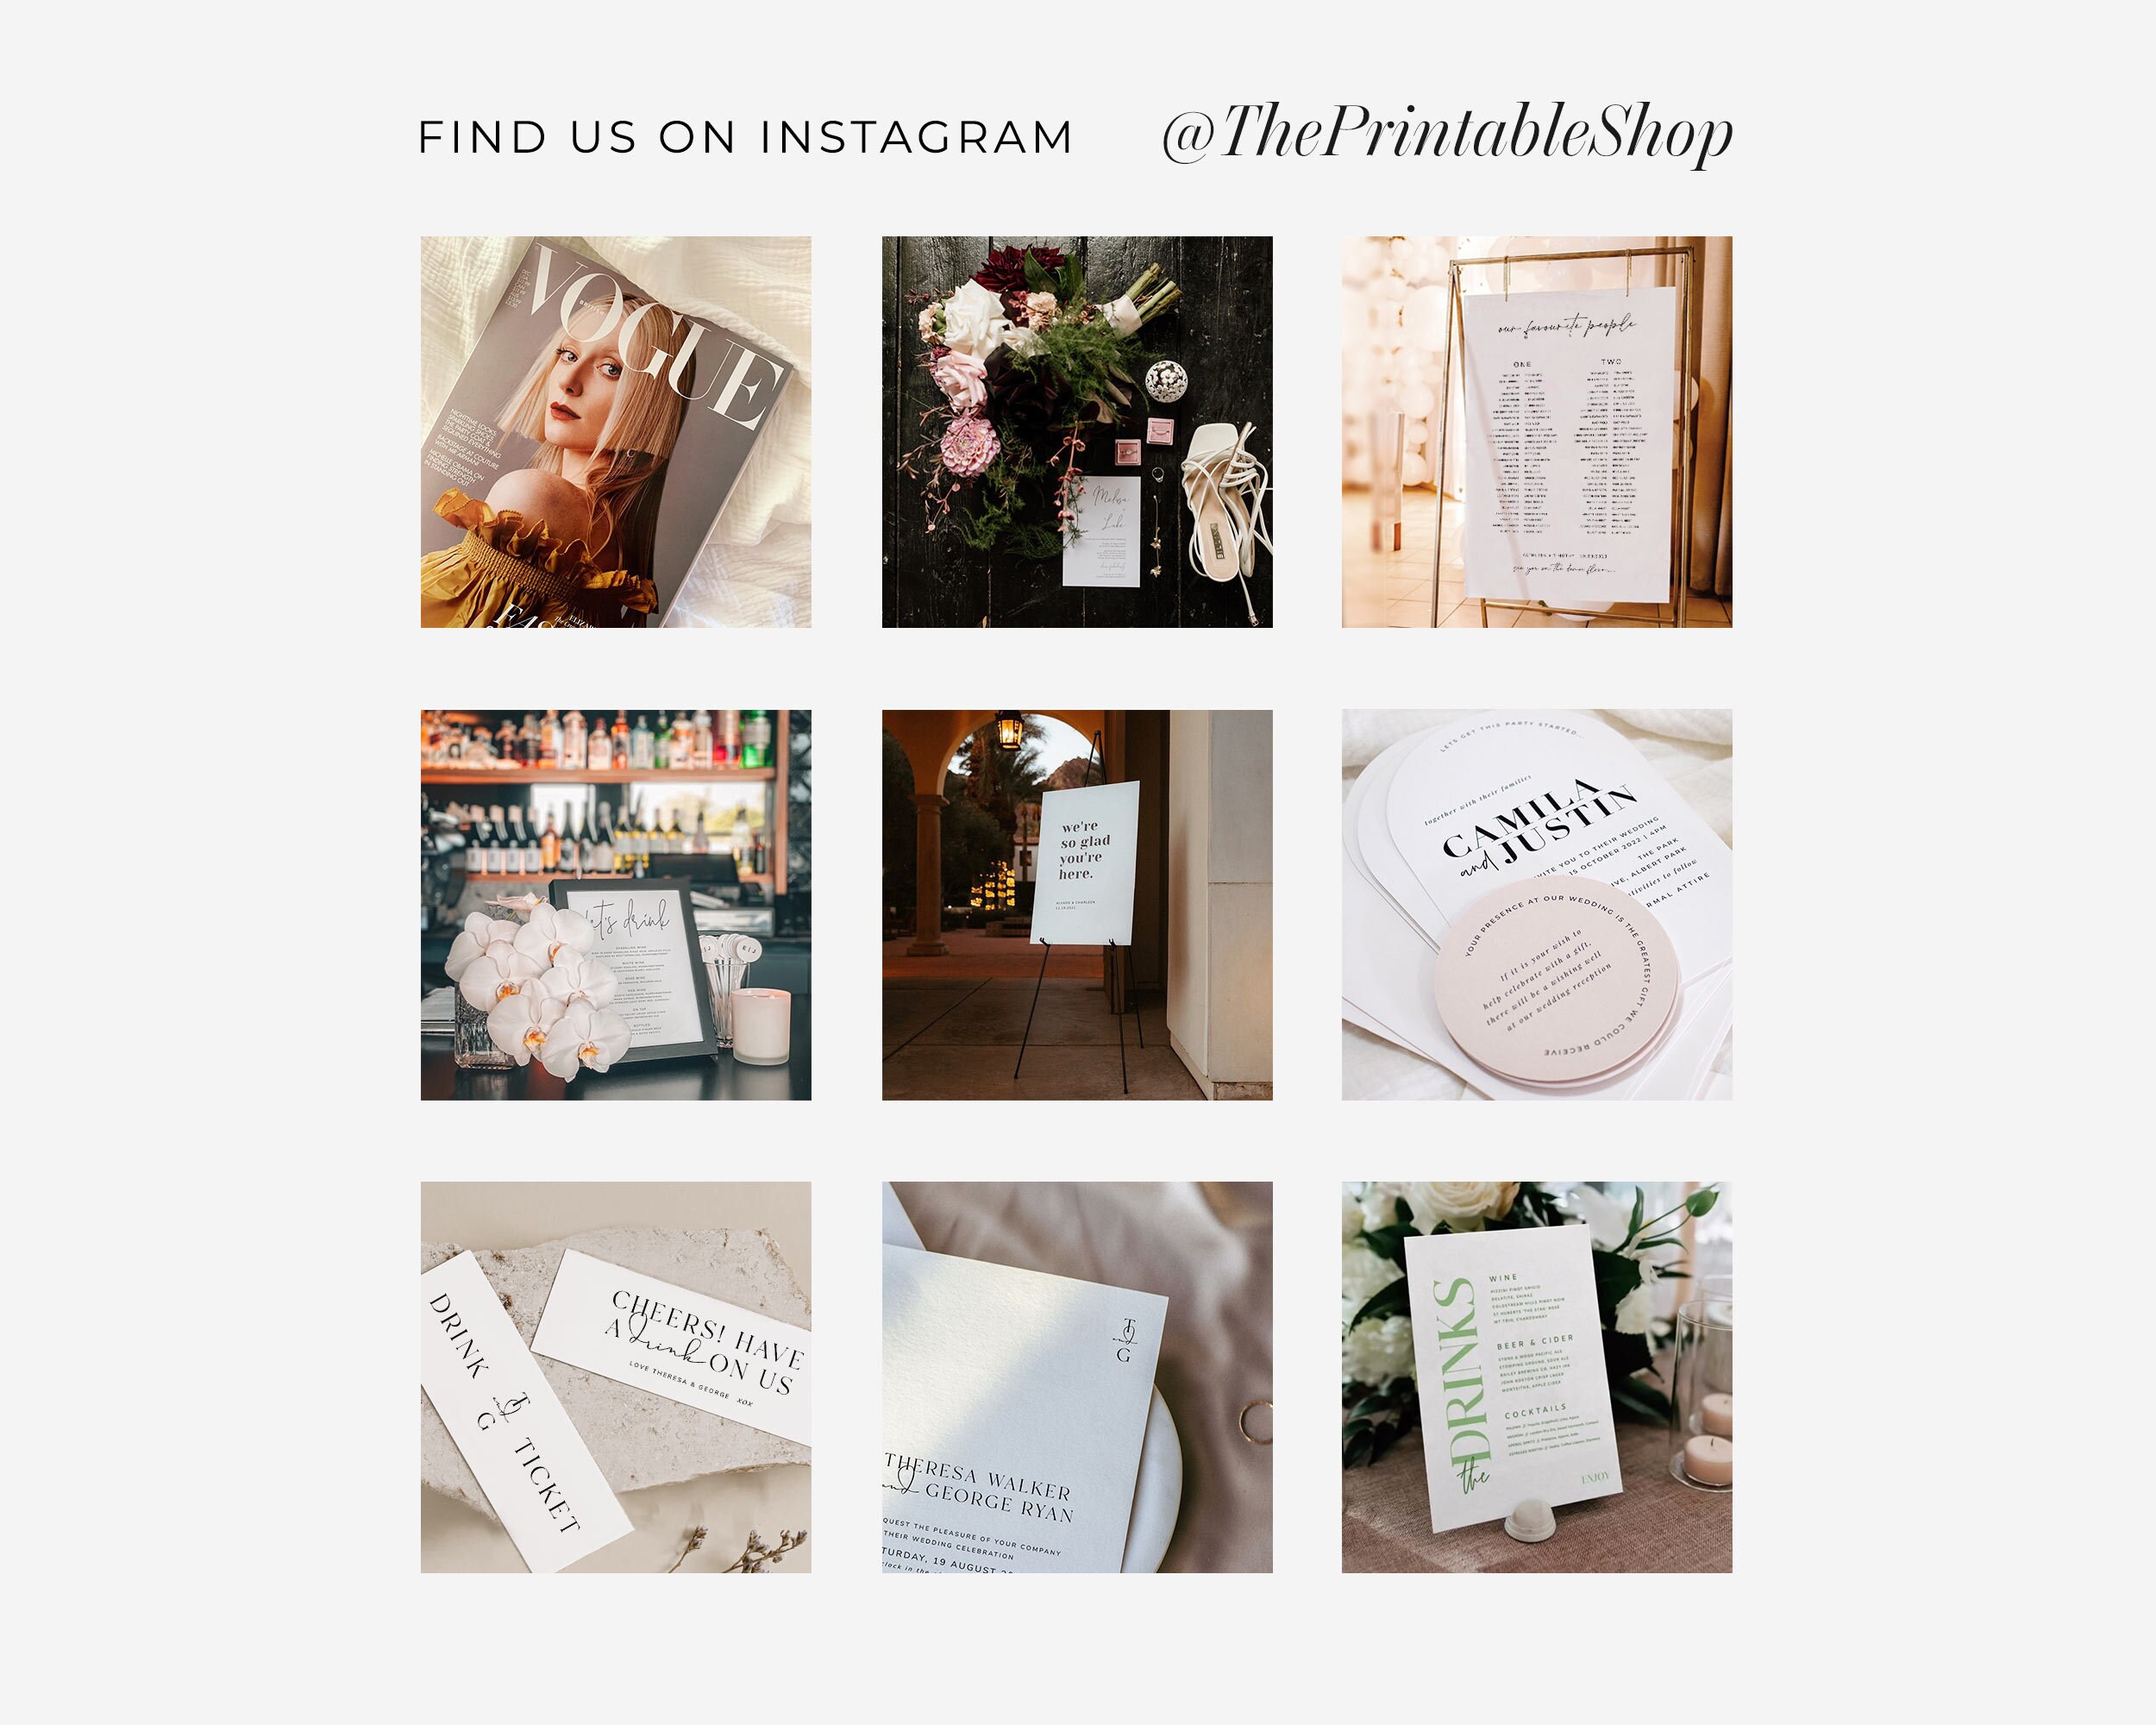 We're So Glad You're Here  Minimalist Wedding Welcome Sign – Wild Bloom  Design Studio